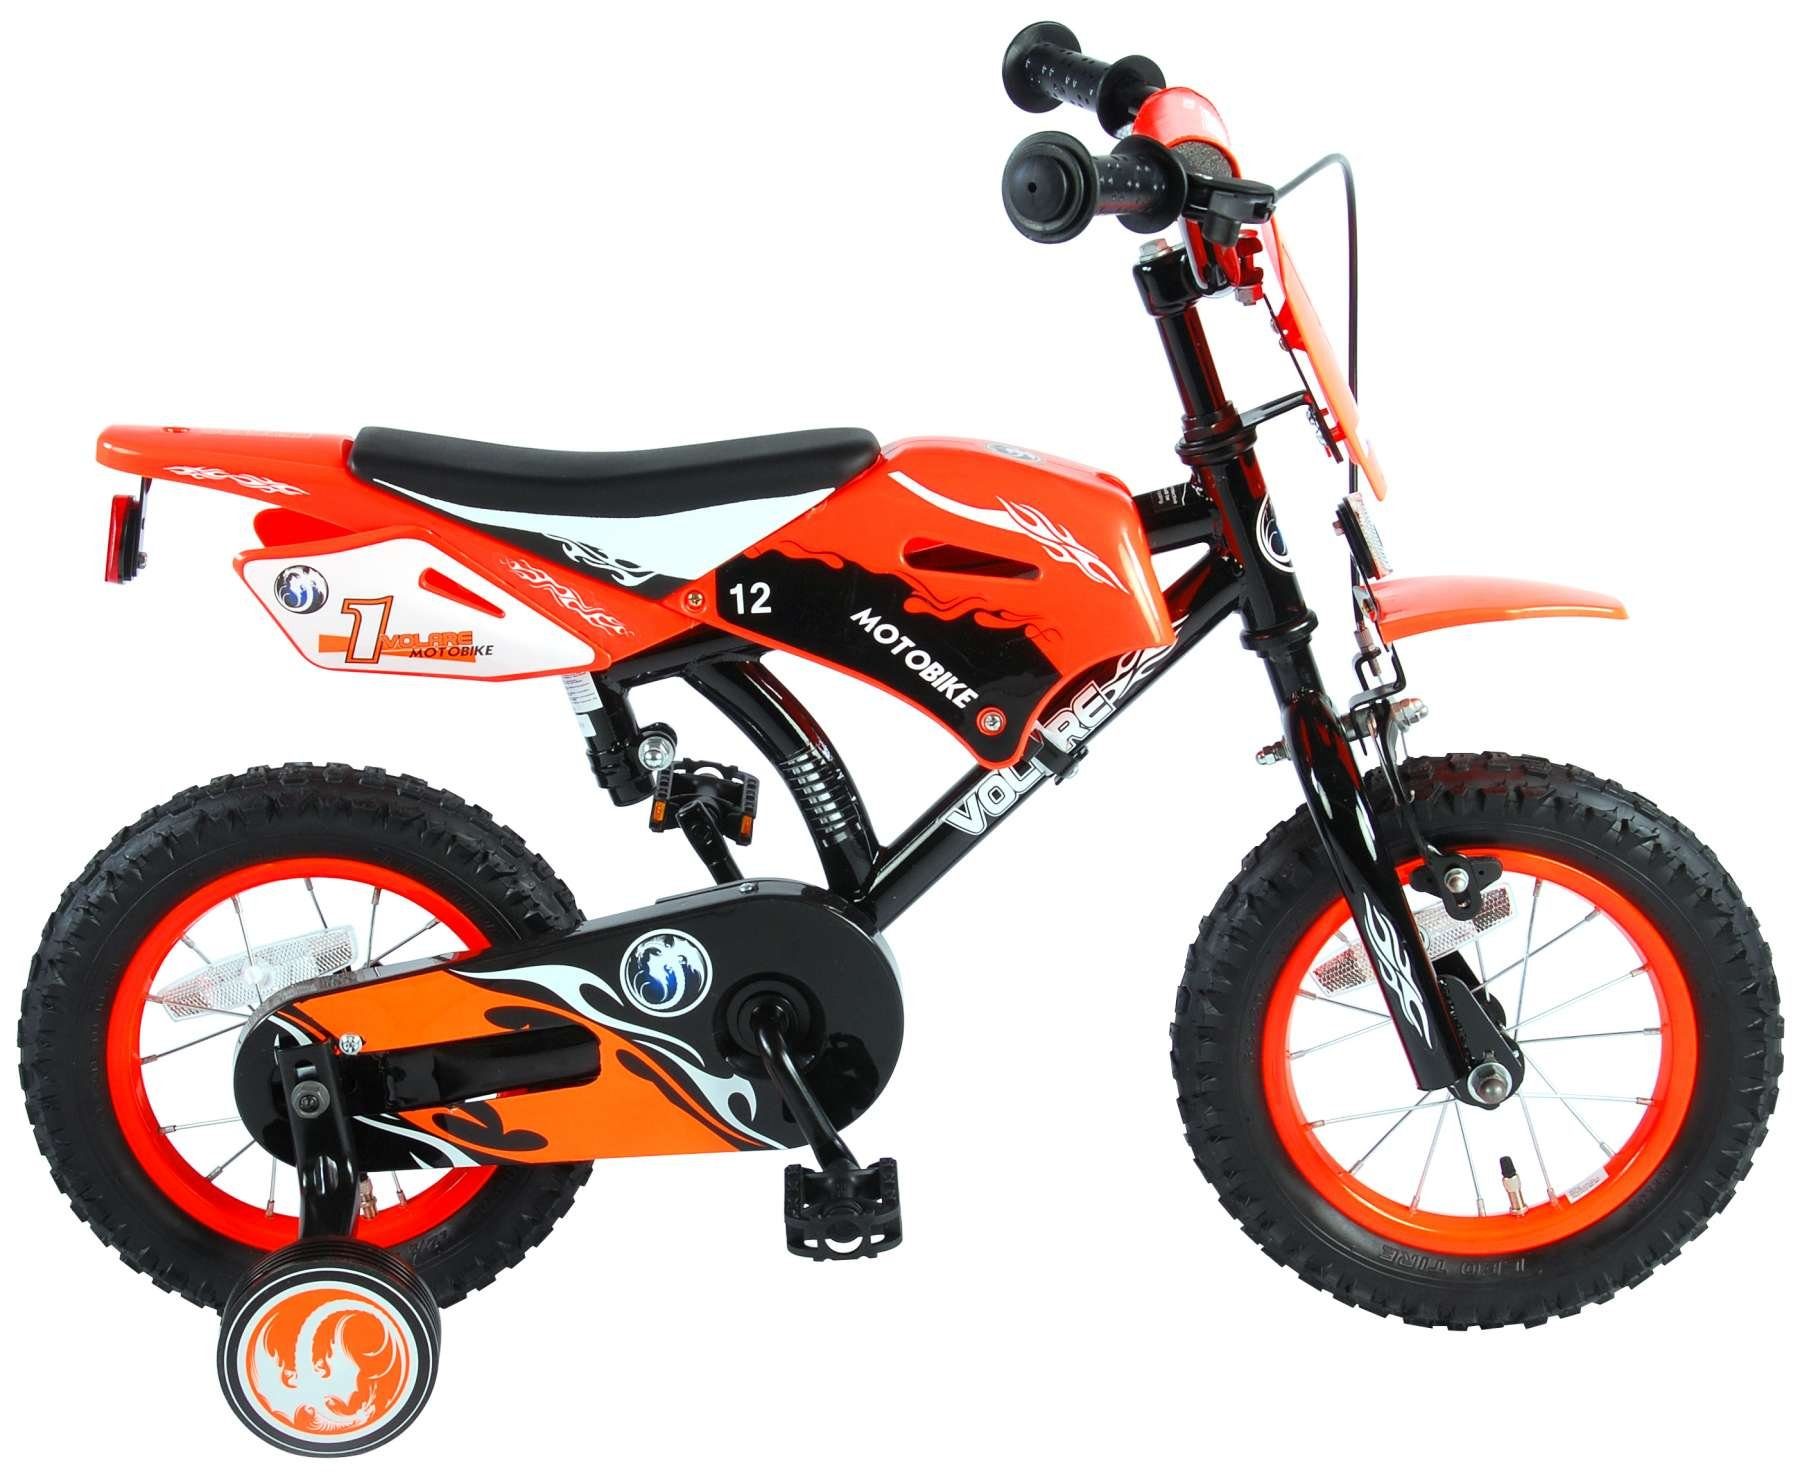 LeNoSa Kinderfahrrad Cross Motorrad Jungen-Mädchen-Fahrrad für Kinder 12 Zoll-Grün & Orange Orange (1x Hand + Rücktrittbremse)